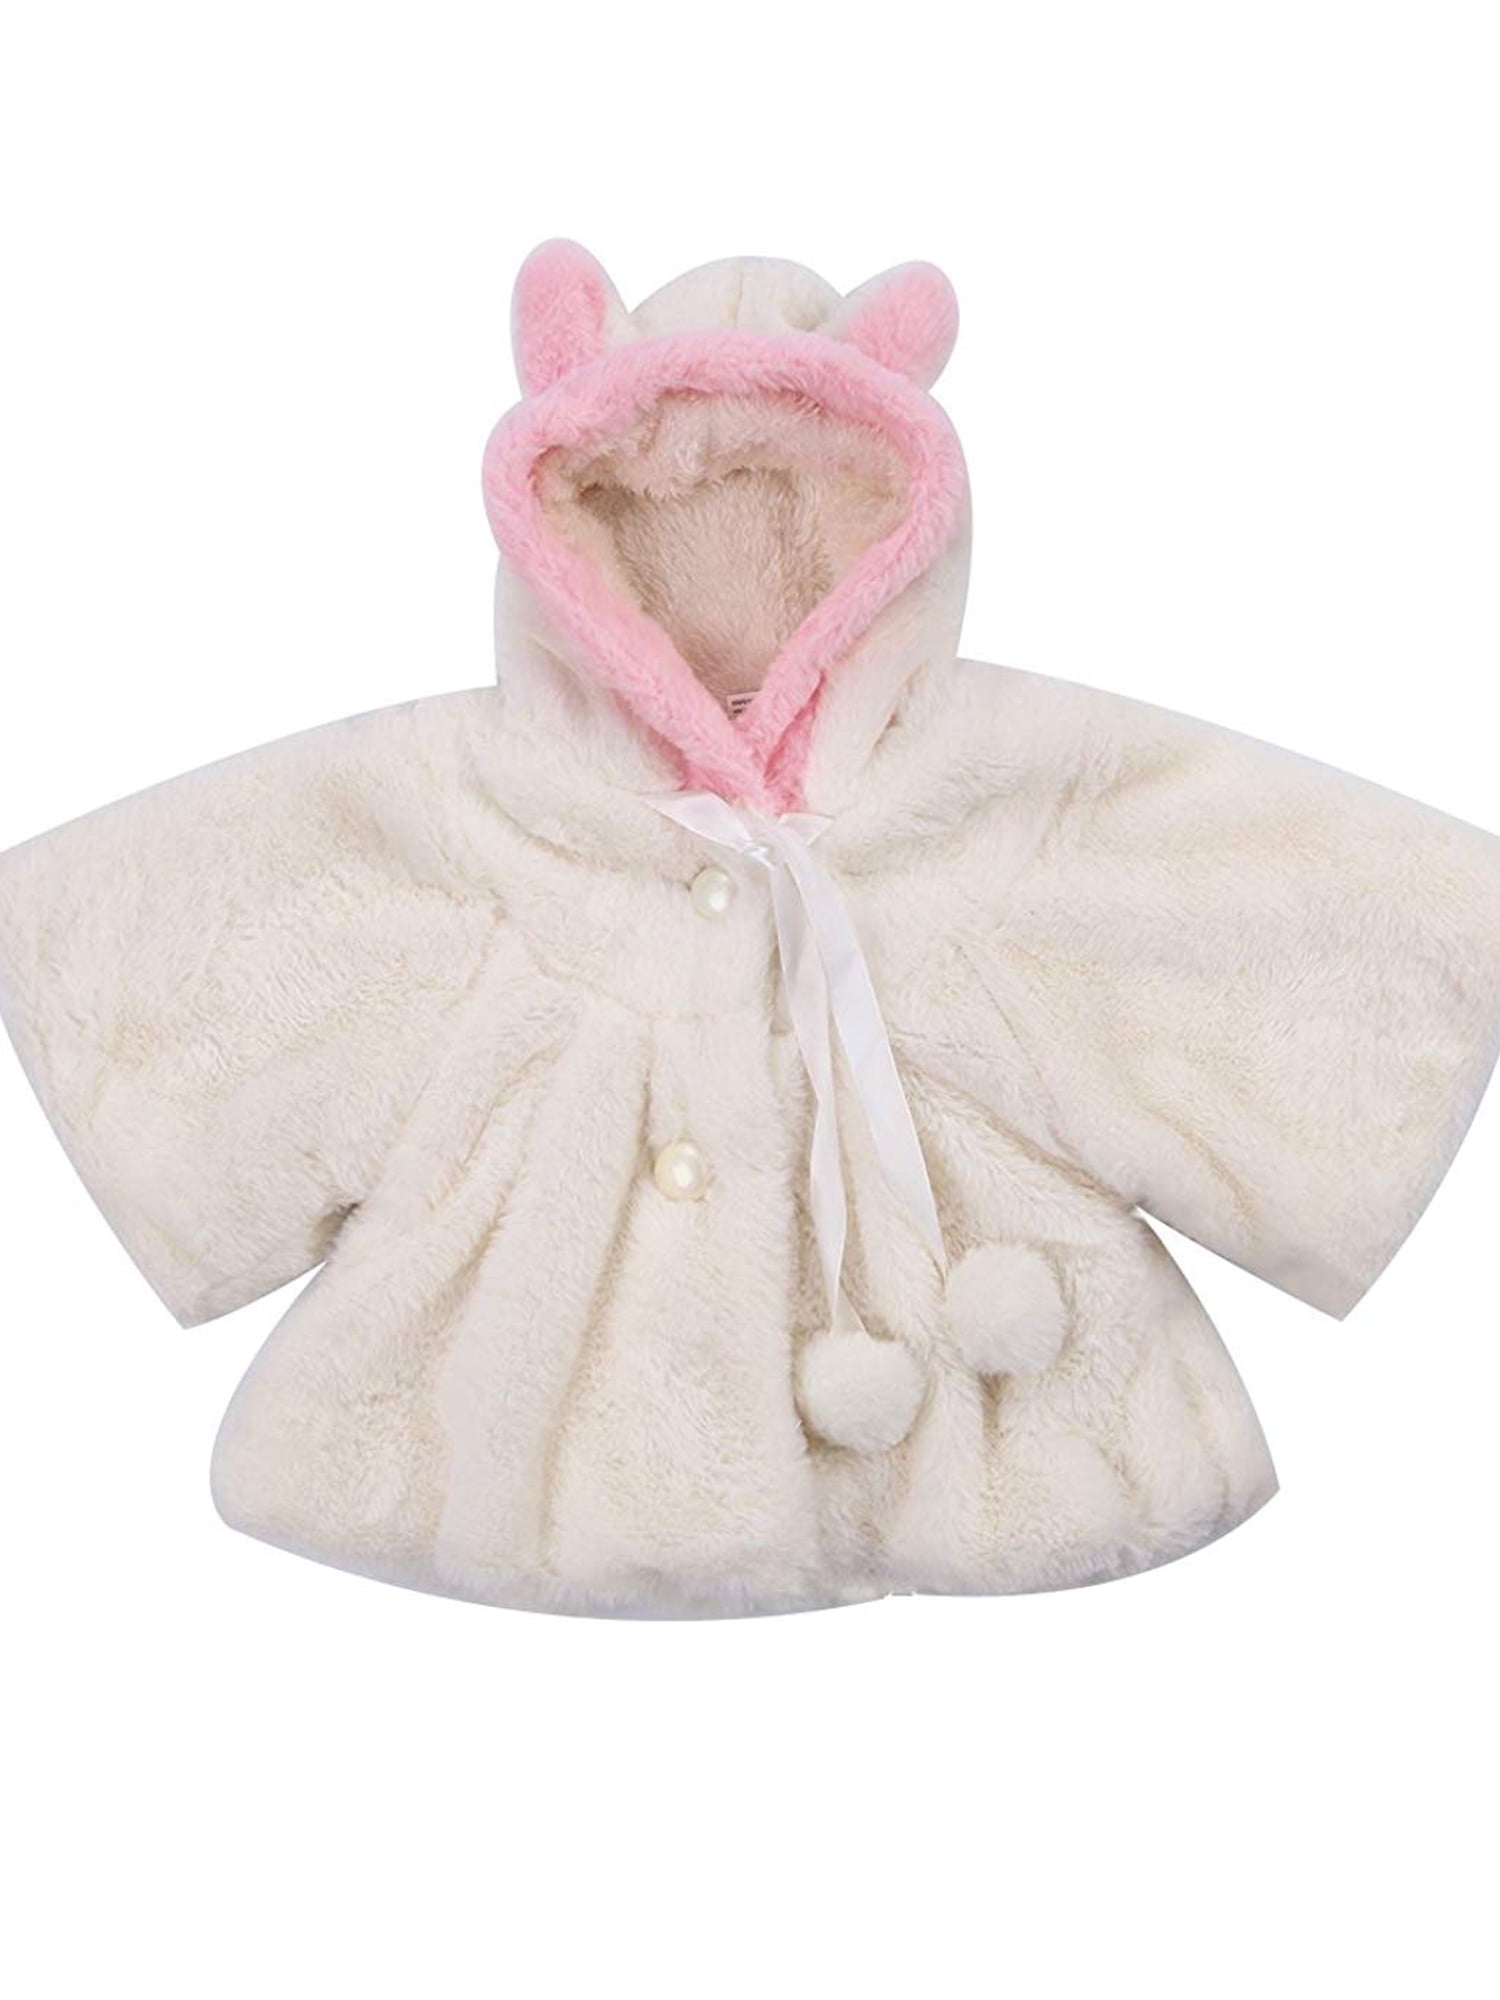 US Cute Newborn Baby Girl Clothes Hooded Coat Jacket Kids Winter Warm